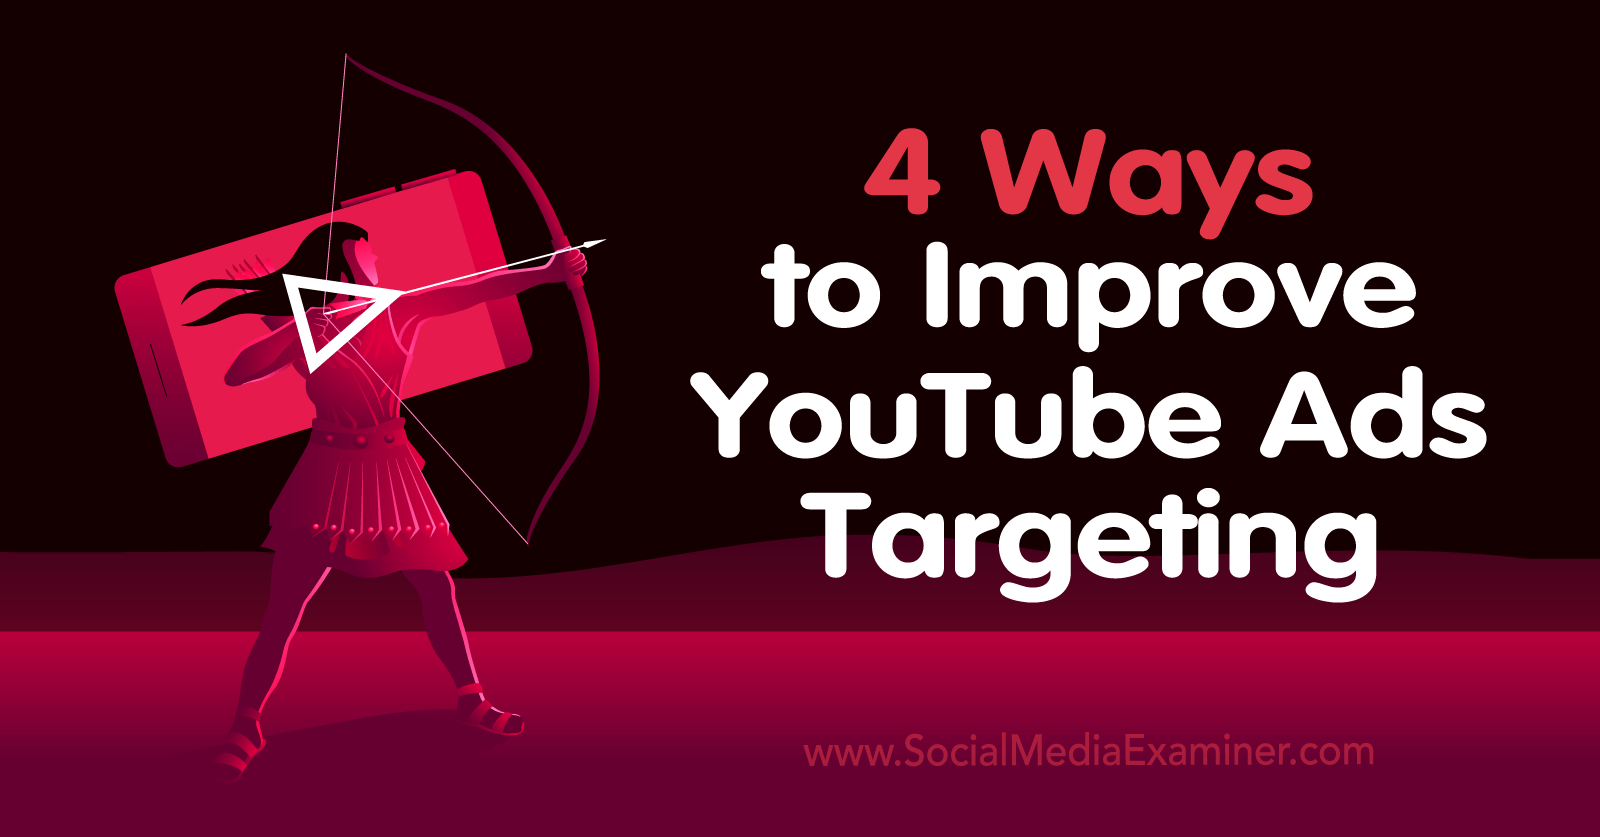 4 Ways to Improve YouTube Ads Targeting-Social Media Examiner